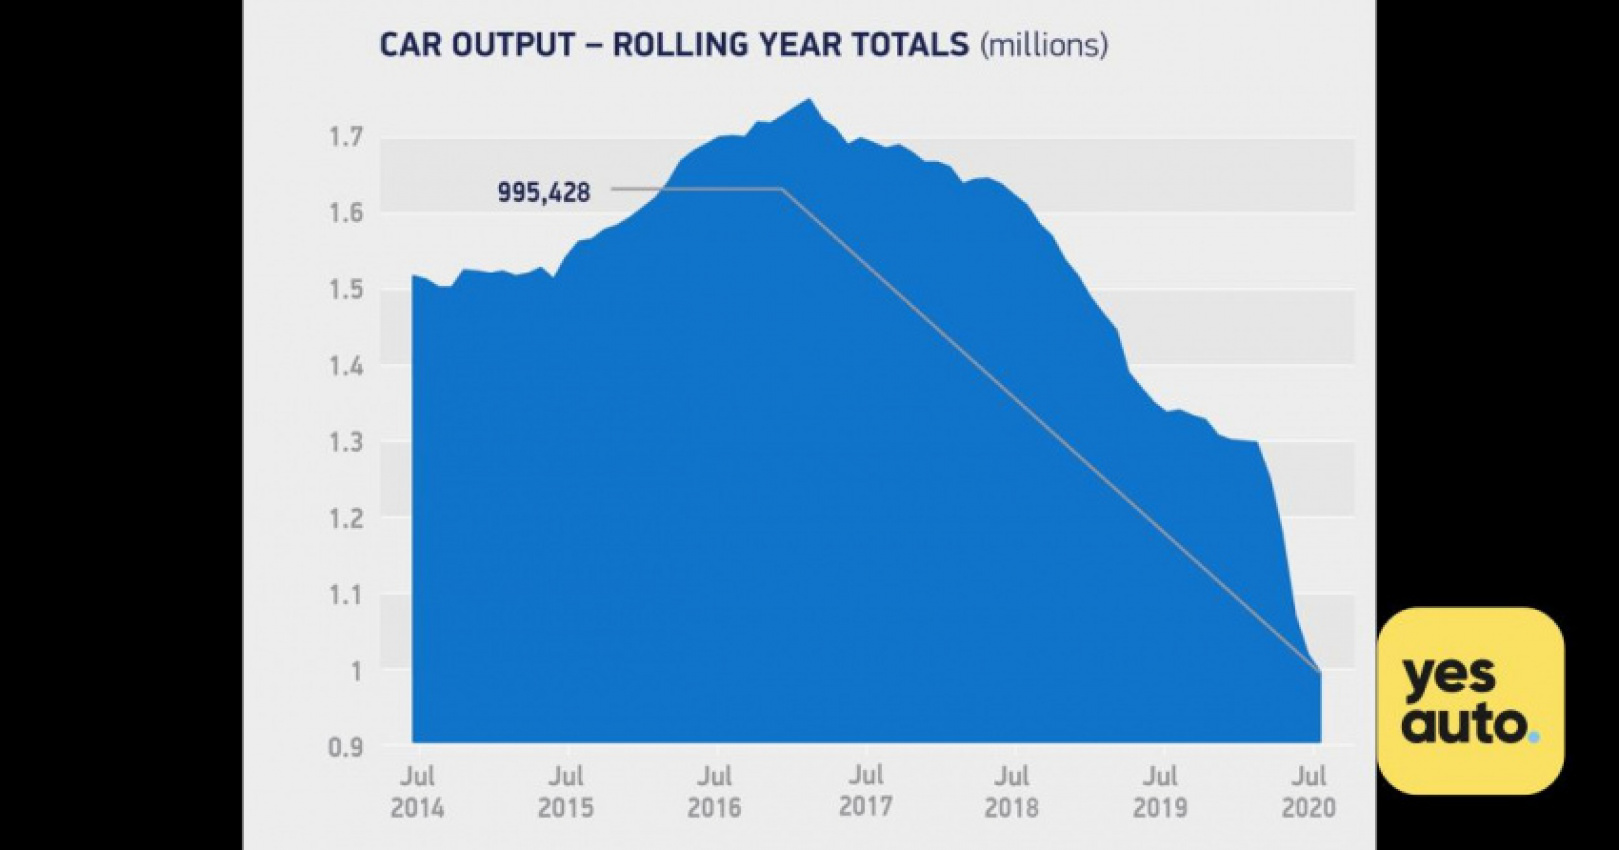 autos, cars, ram, car news, car production ramping up post-lockdown, july figures show